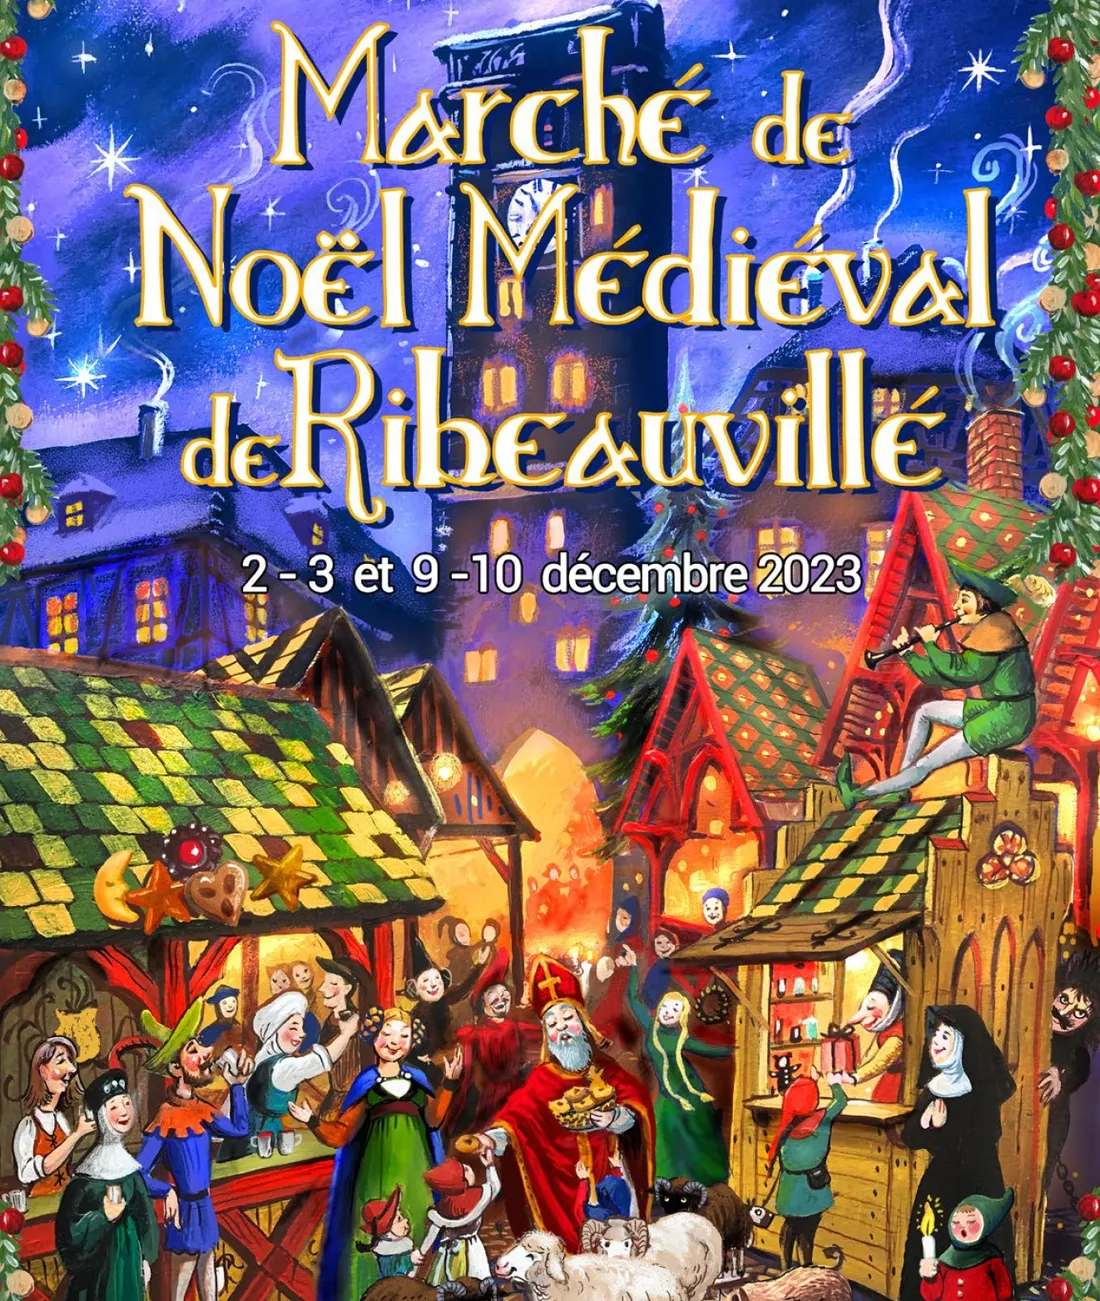 Marché de Noël Médiéval de Ribeauvillé